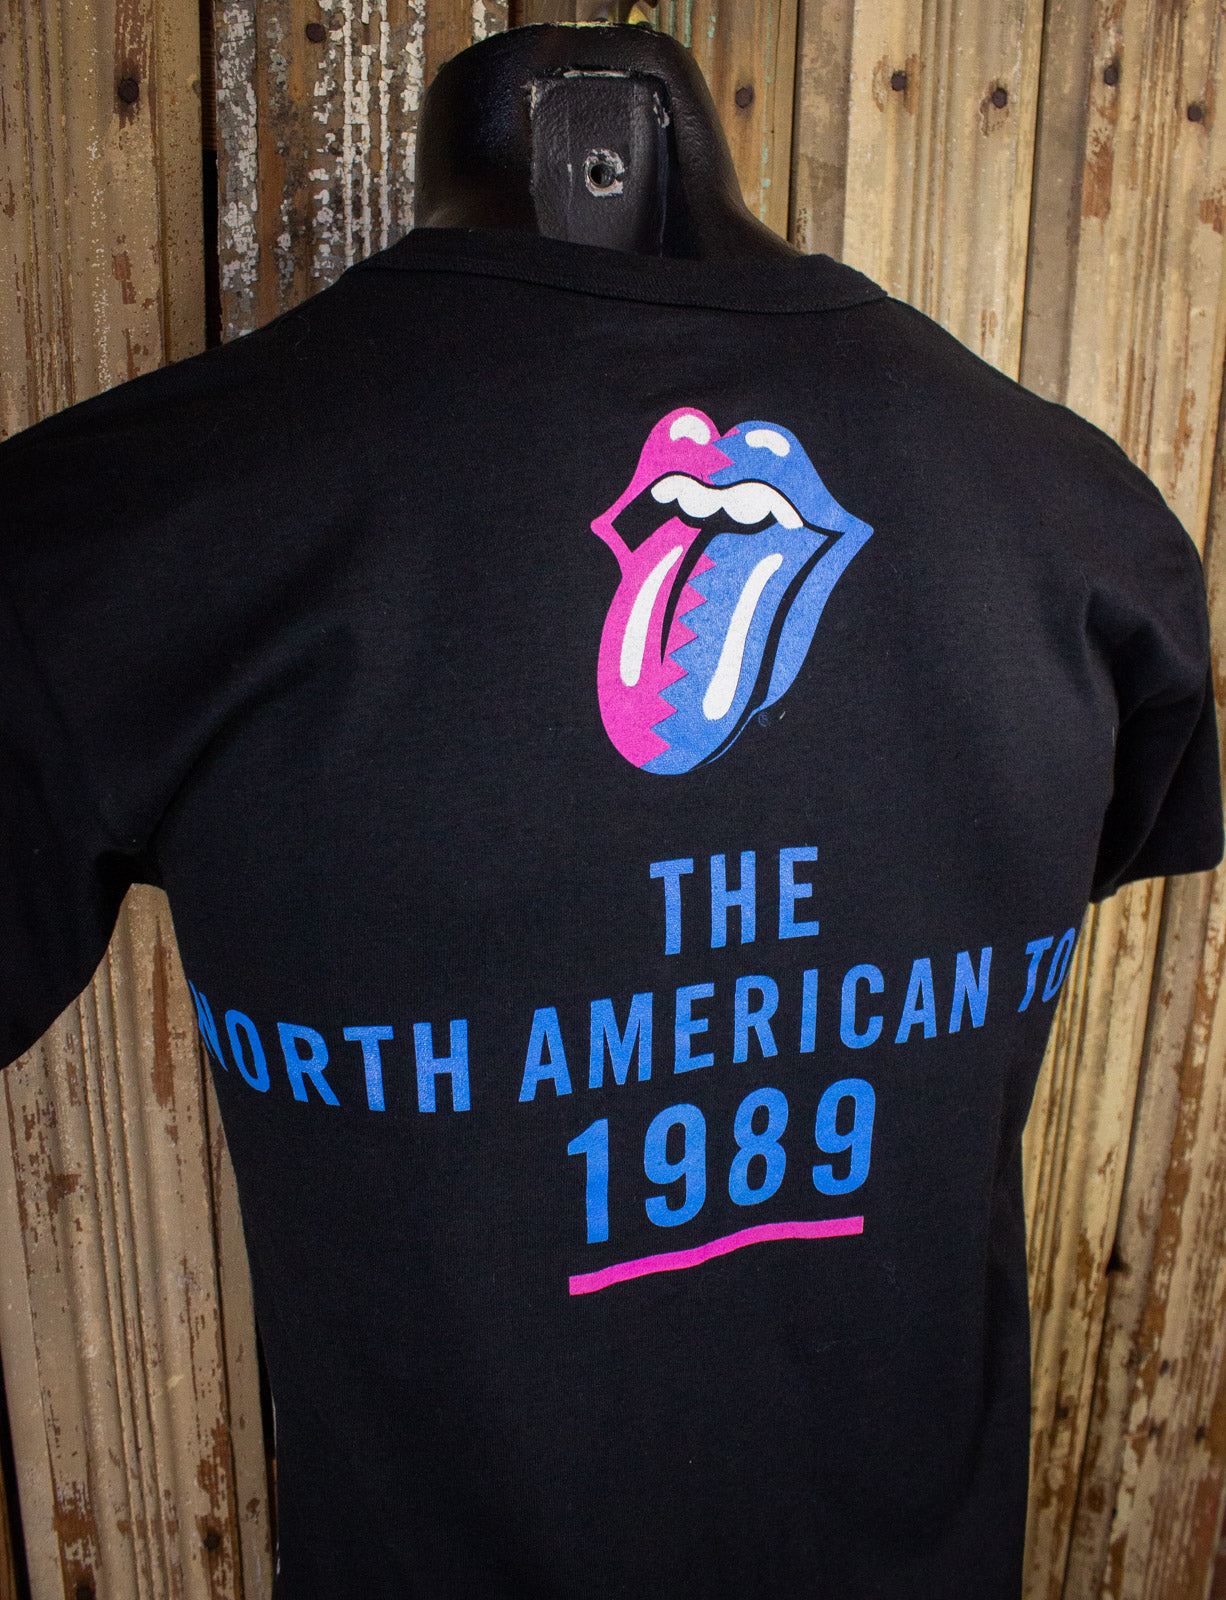 Vintage Rolling Stones Steel Wheels Concert T shirt 1989 Black Small